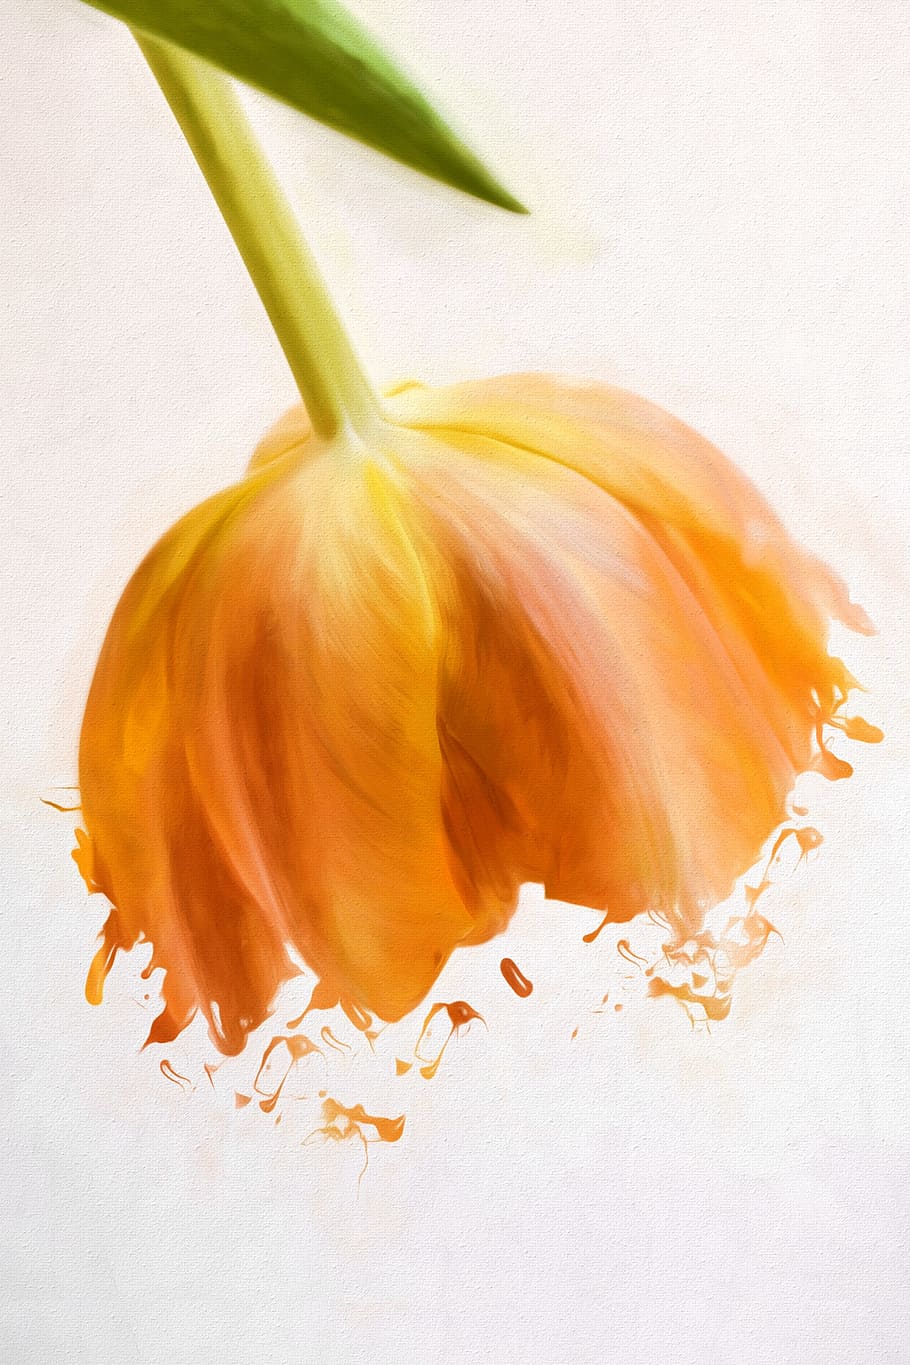 Imagem, Pintura, Pintado, Tulipa, Flor, laranja, flor de laranjeira, tinta, flor de primavera, flor de primavera laranja